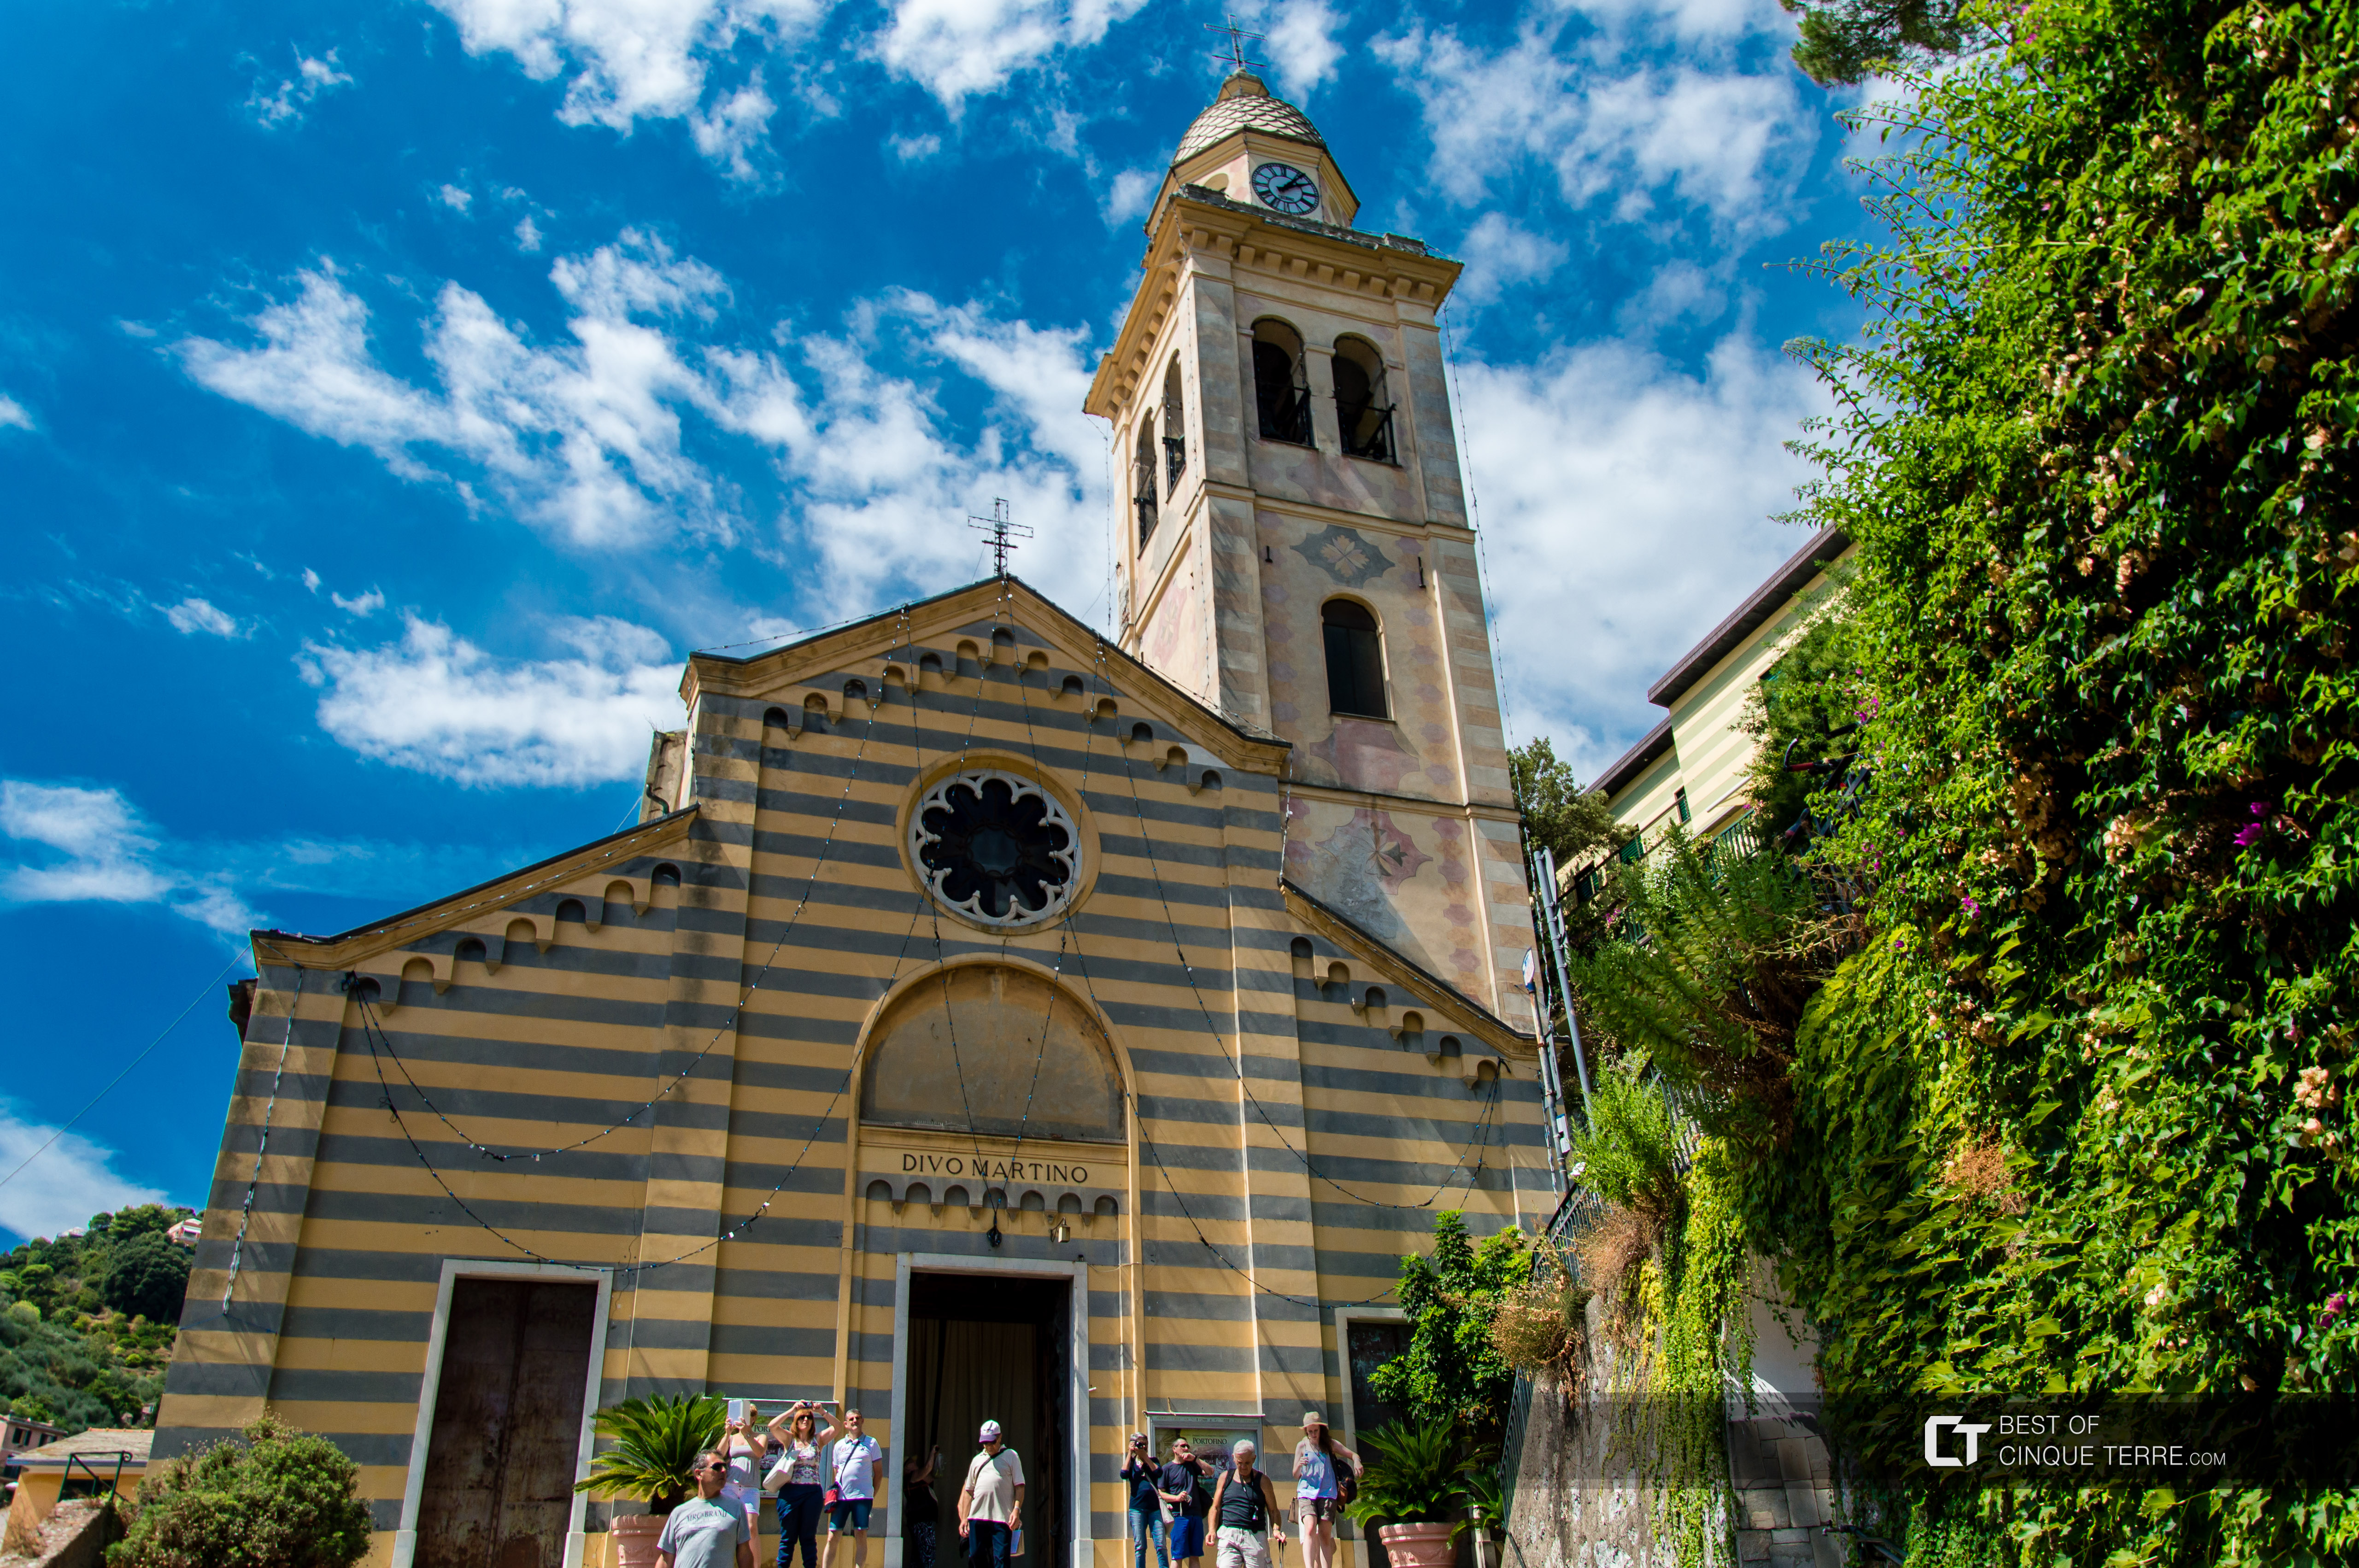 Church of St. Martin, Portofino, Italy